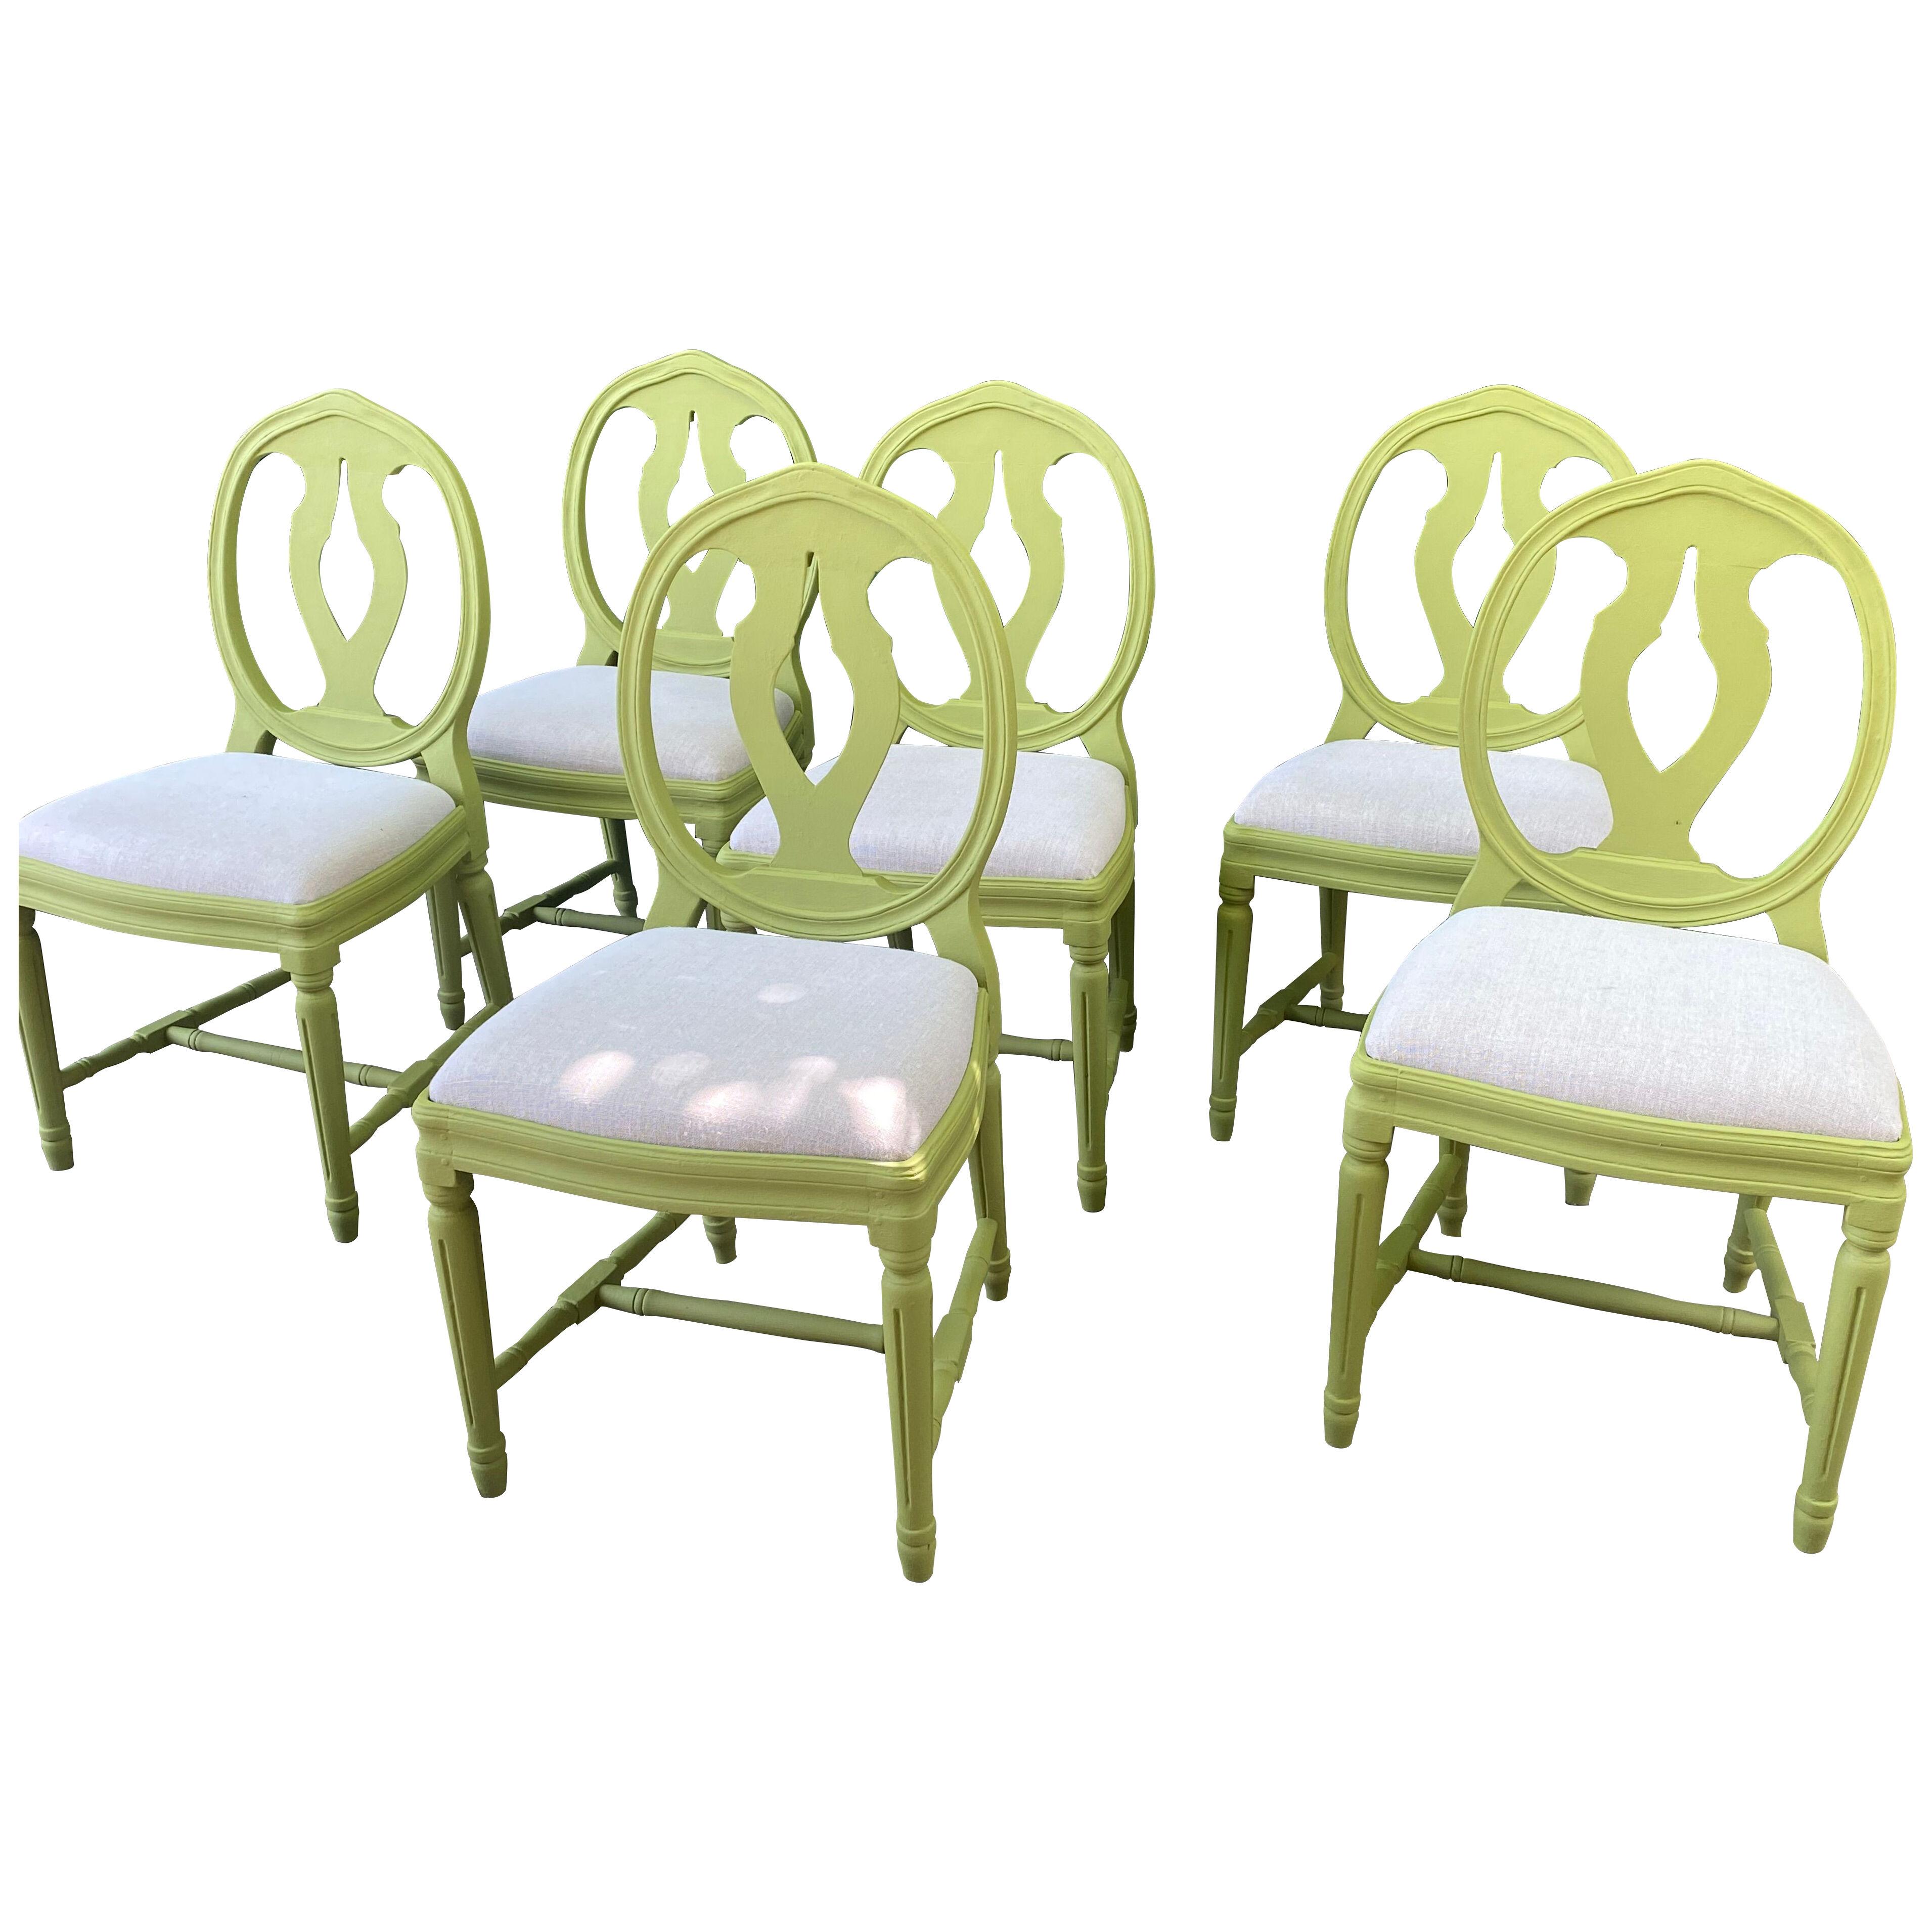 Set of 6 Swedish Chairs